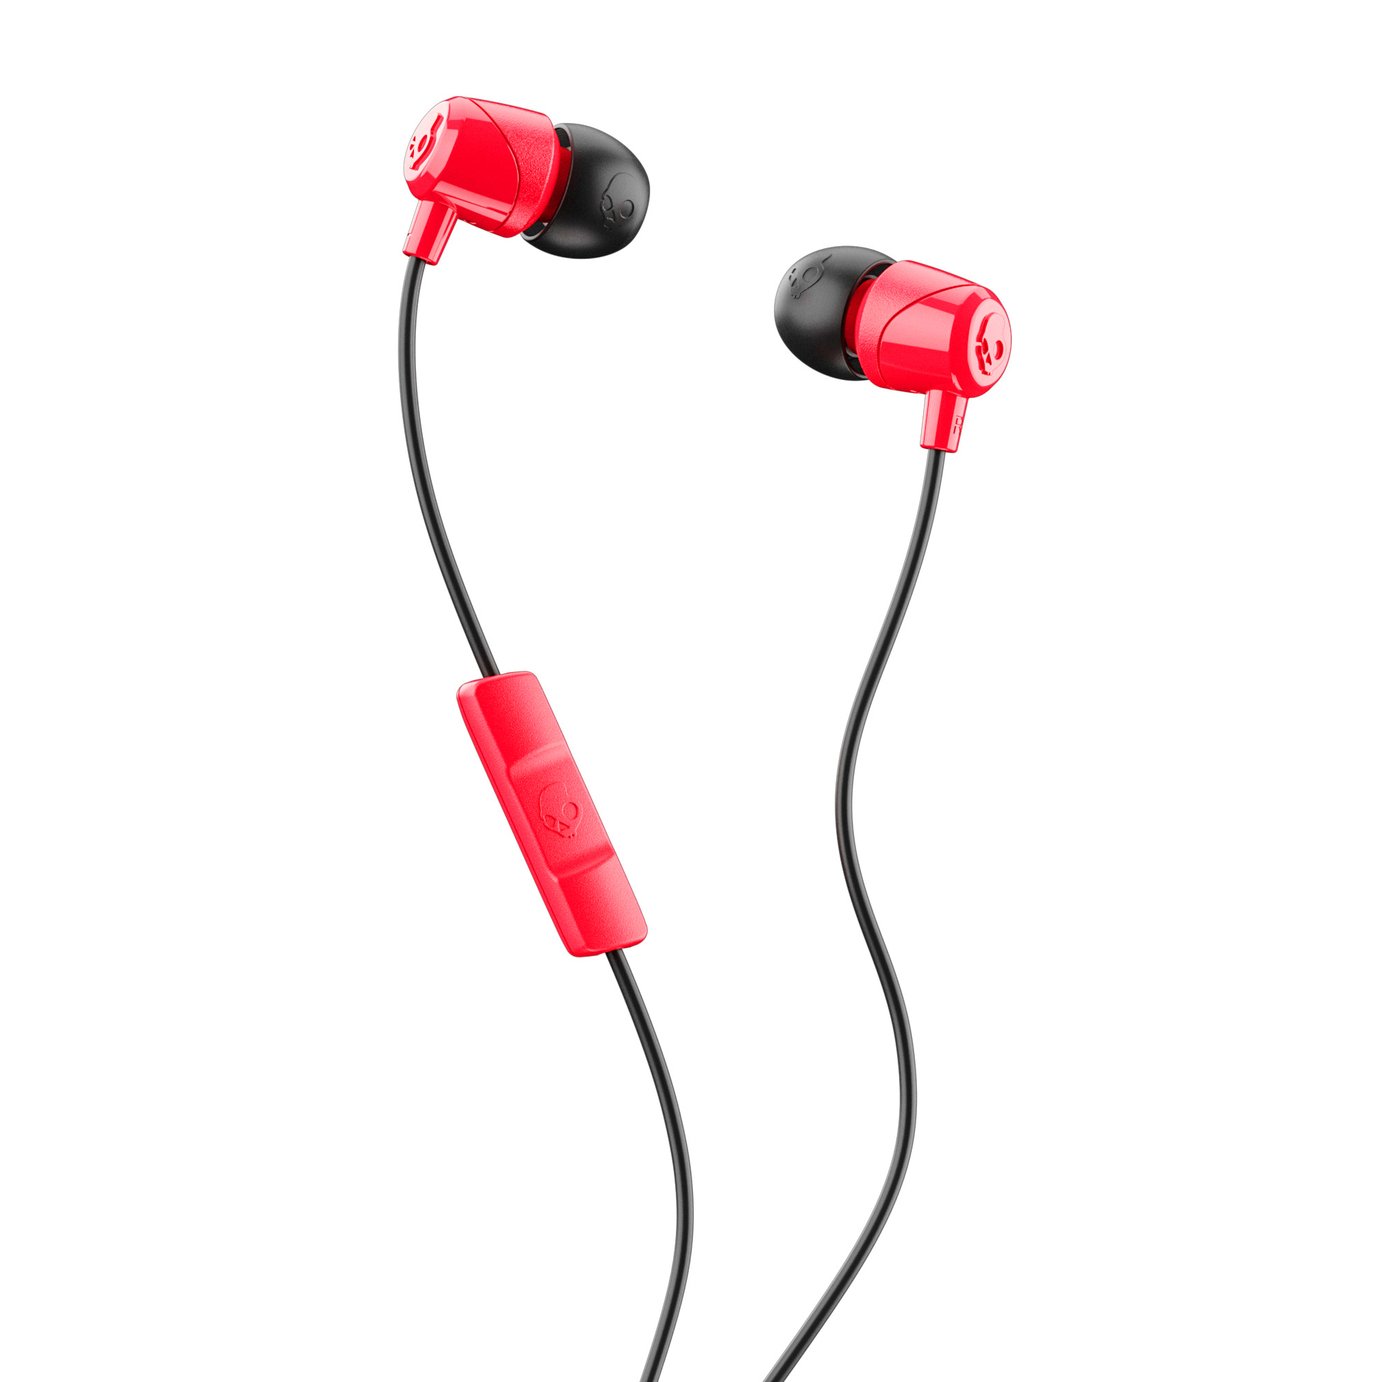 Skullcandy Jibs In-Ear Wired Headphones Review